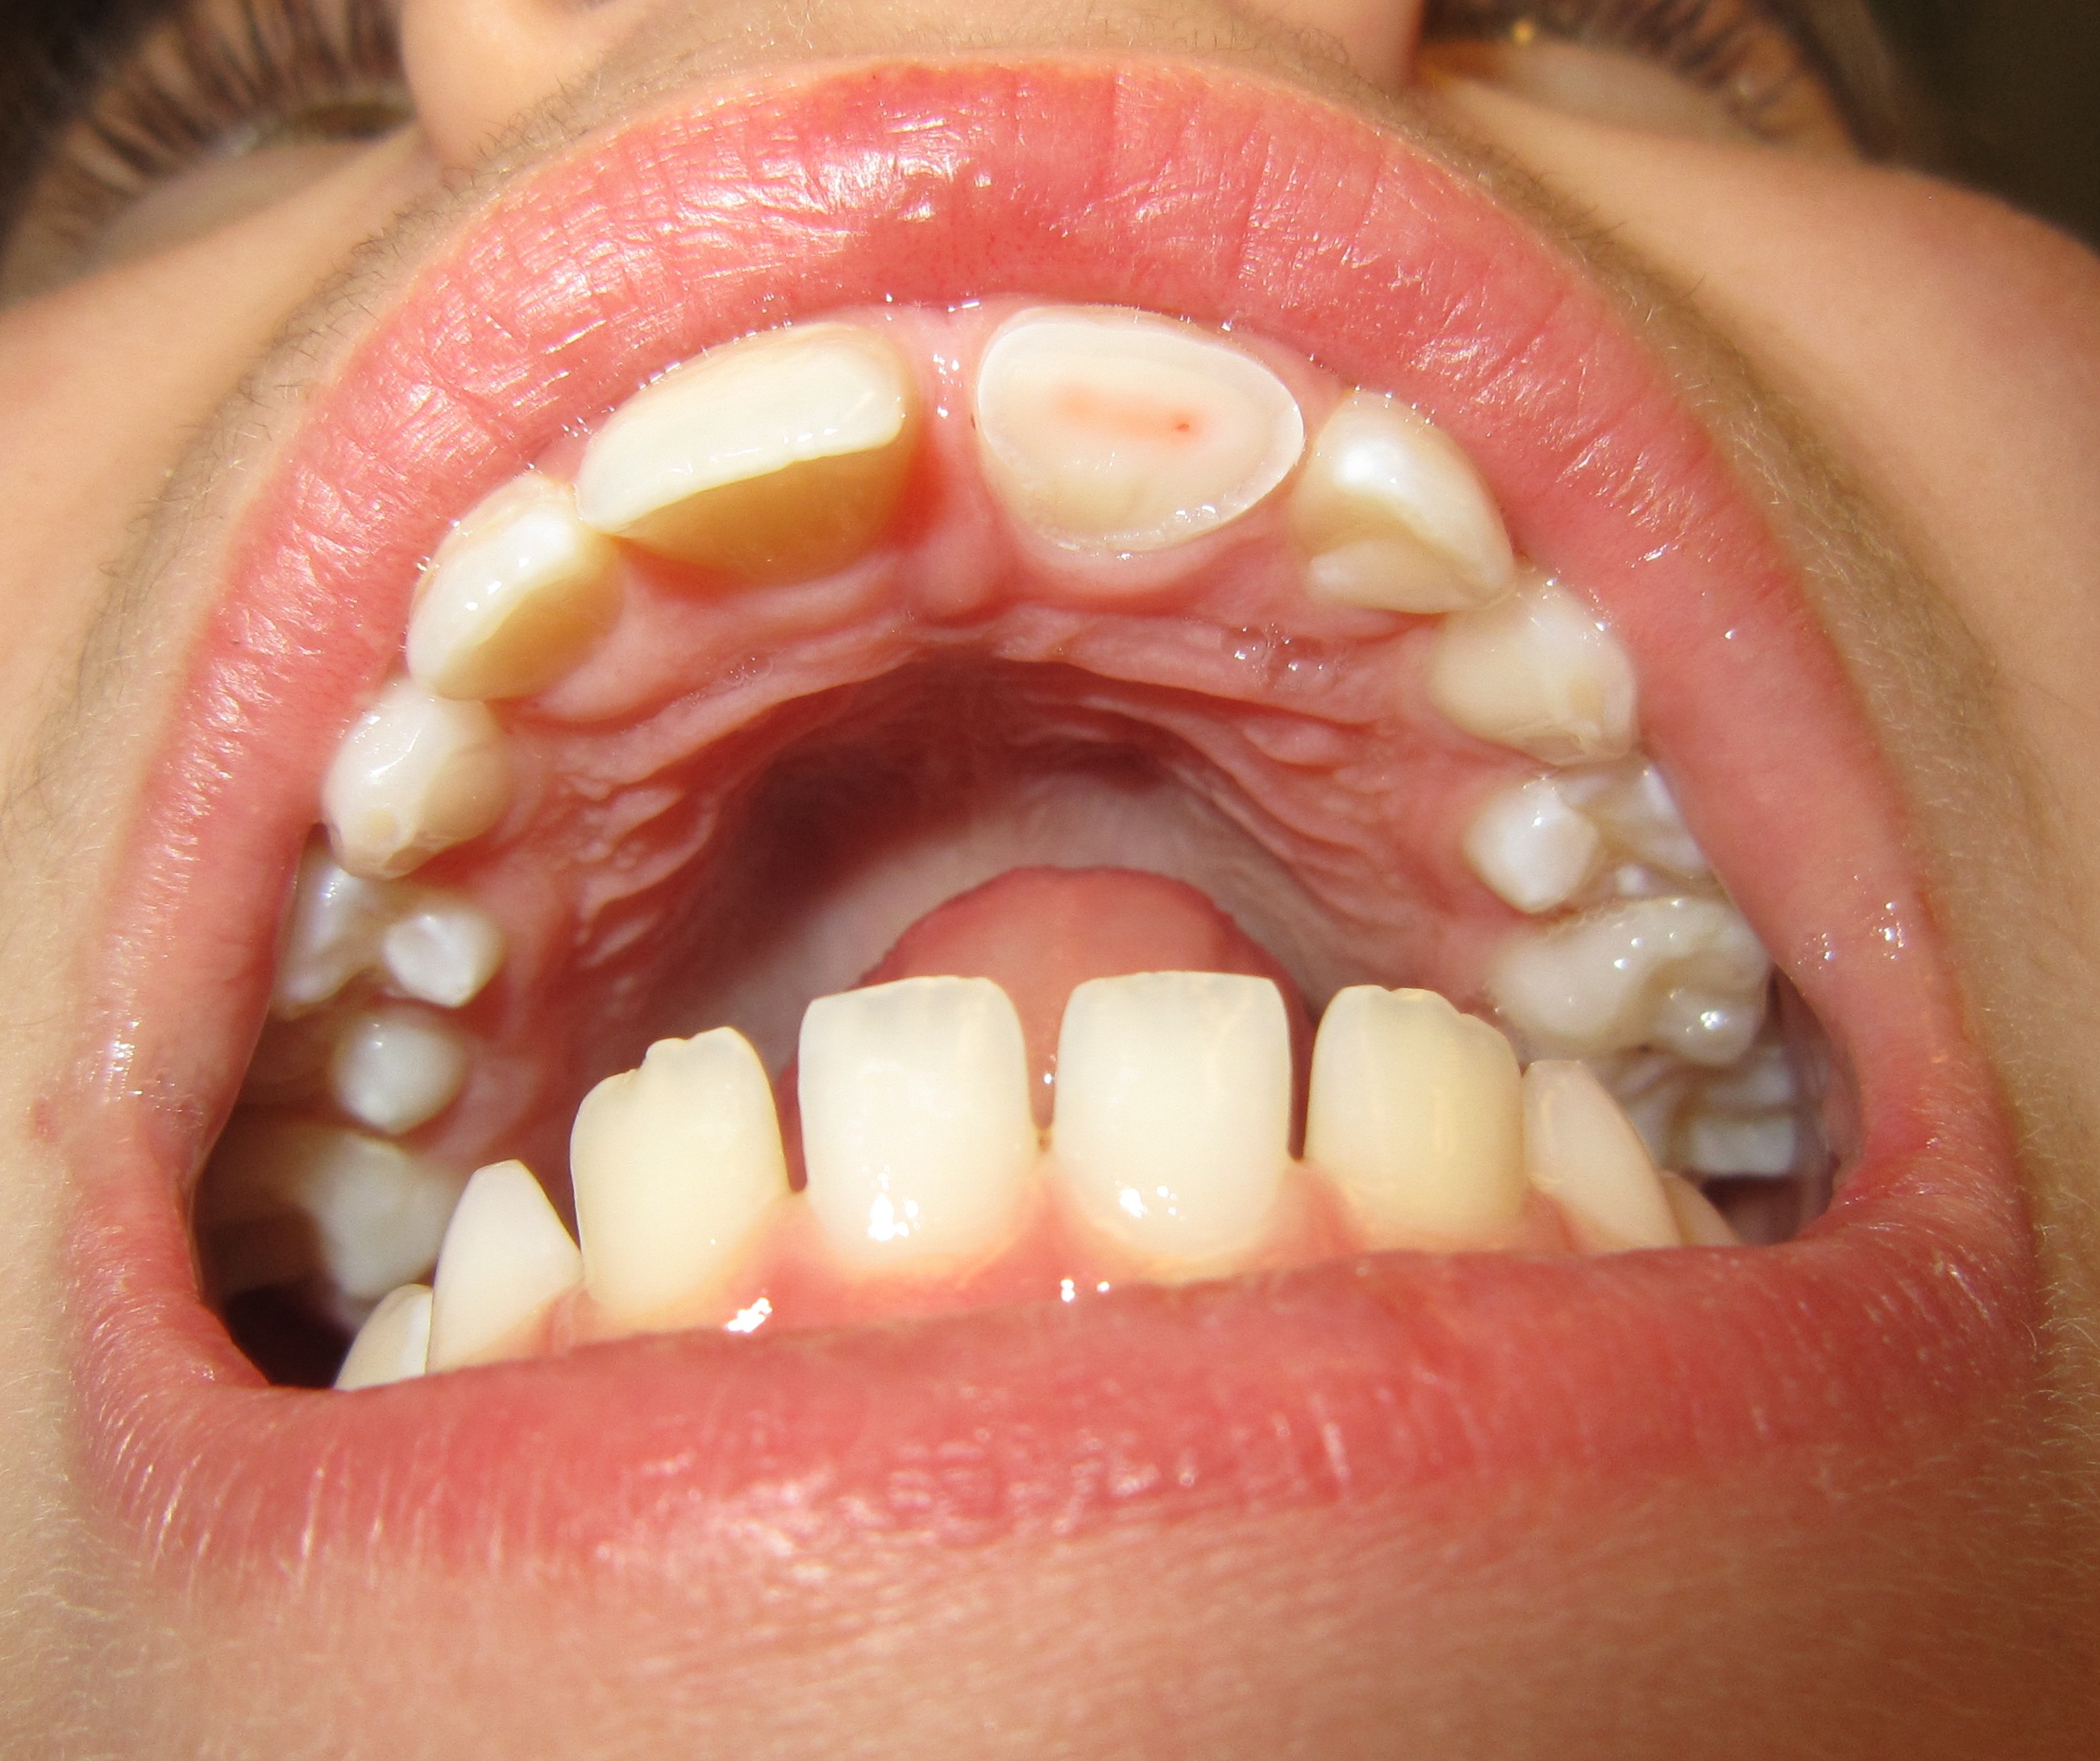 BROKEN TEETH: TRAUMA AND TREATMENT - Serene Dental